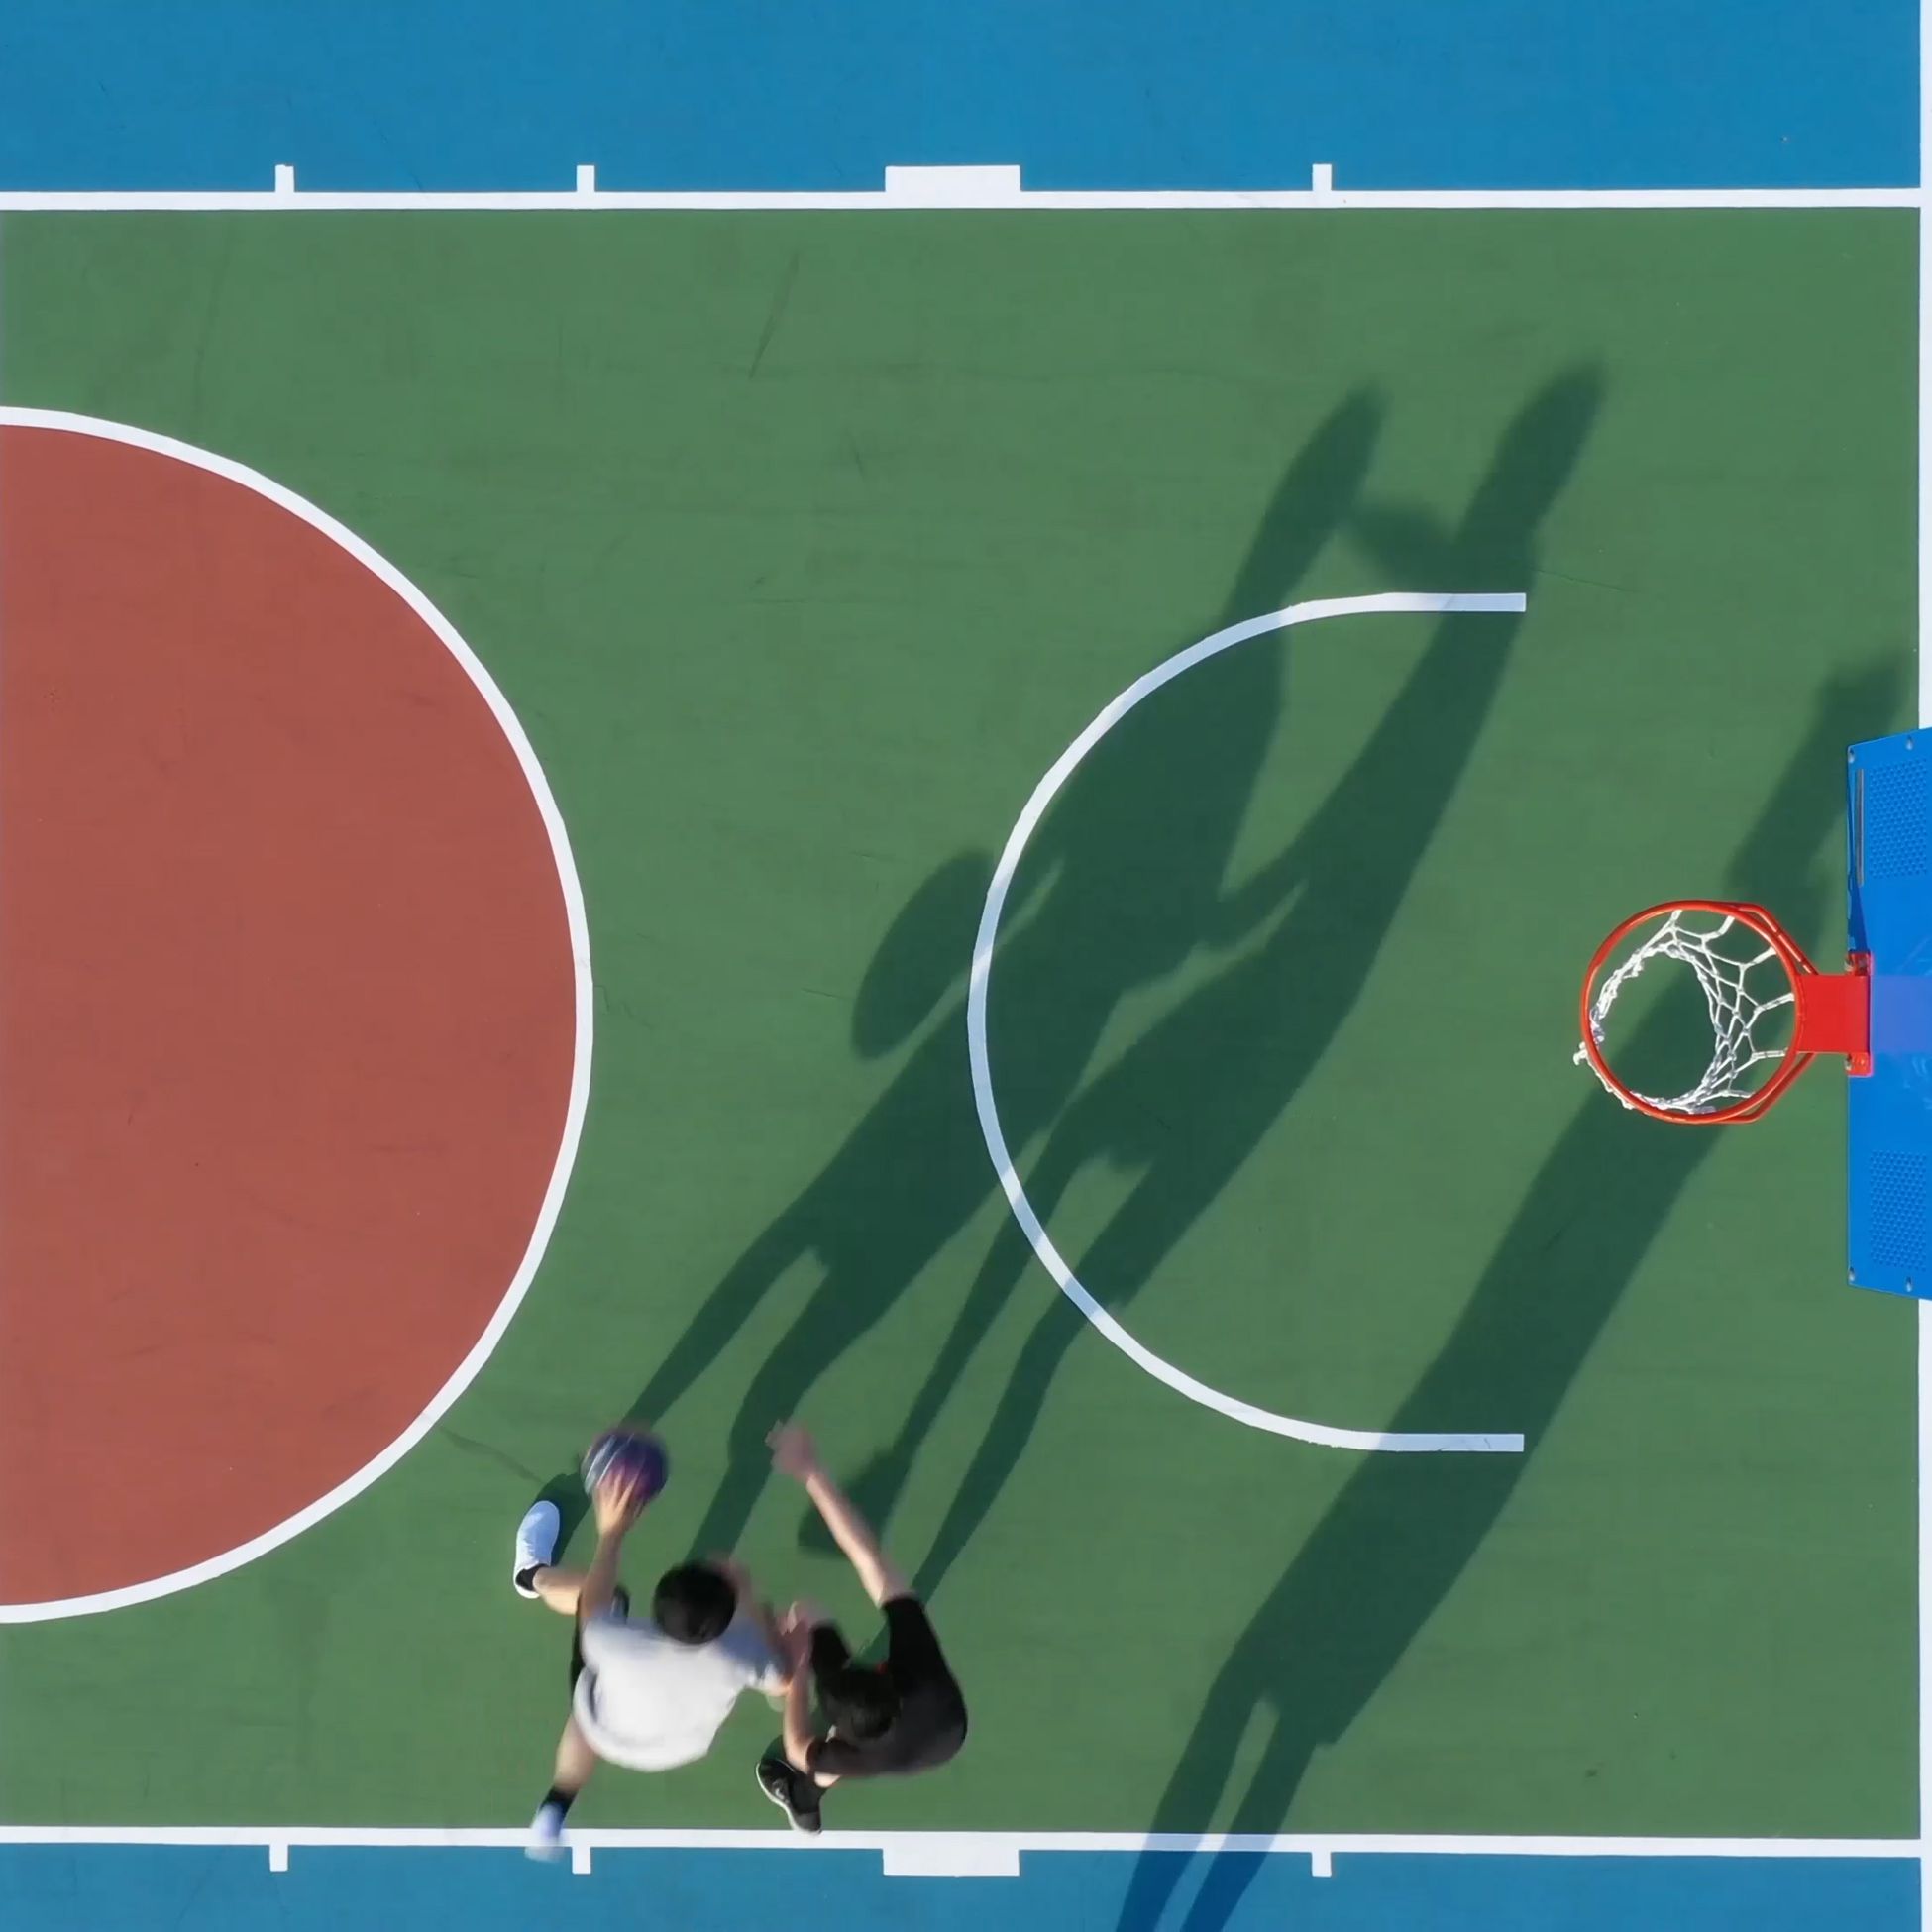 FIBA 3X3 Basketball Court, Unsworth Reserve